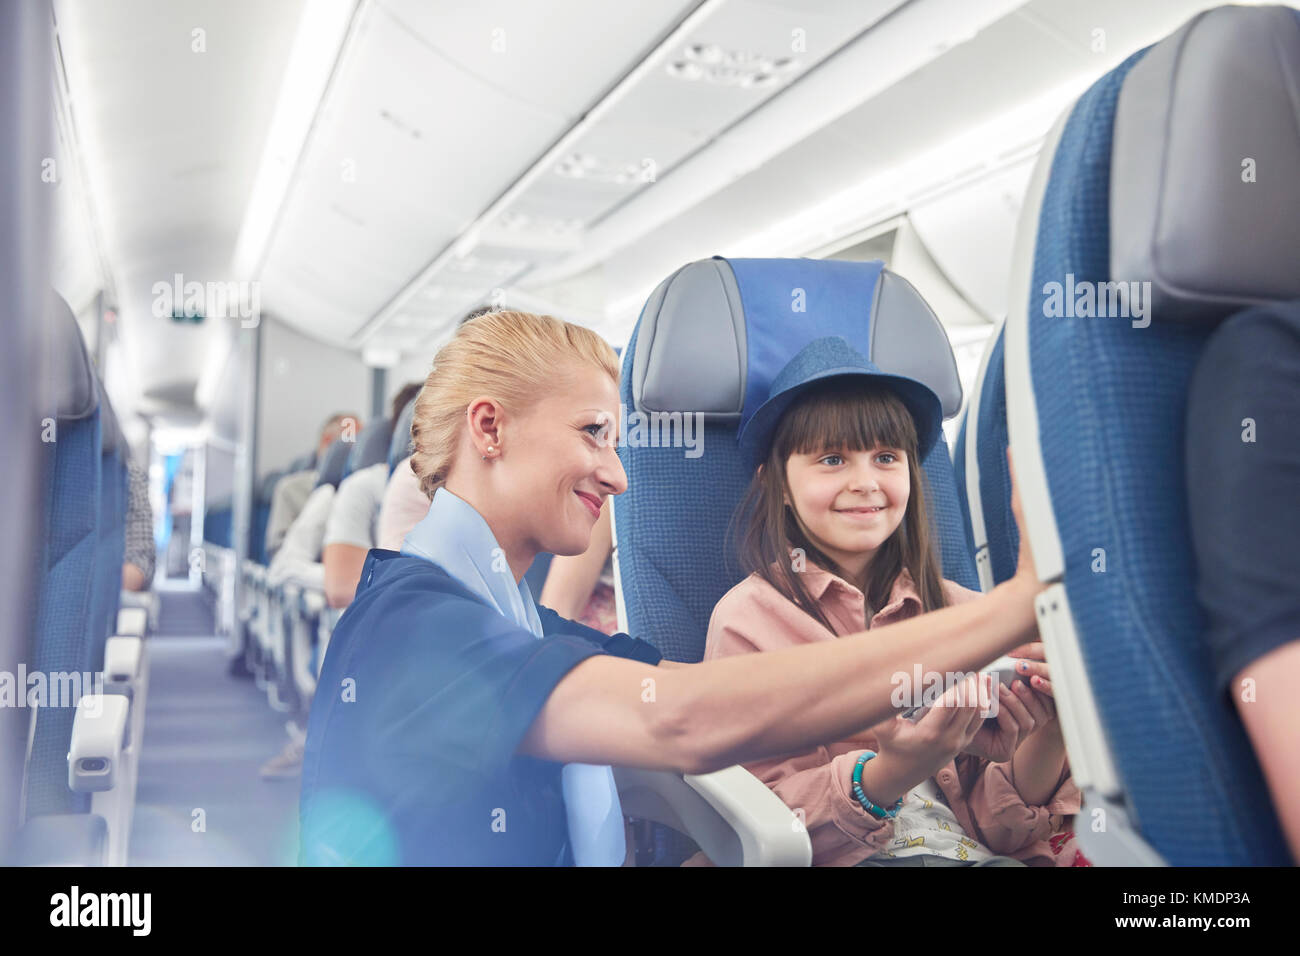 Flight attendant helping girl passenger on airplane Stock Photo